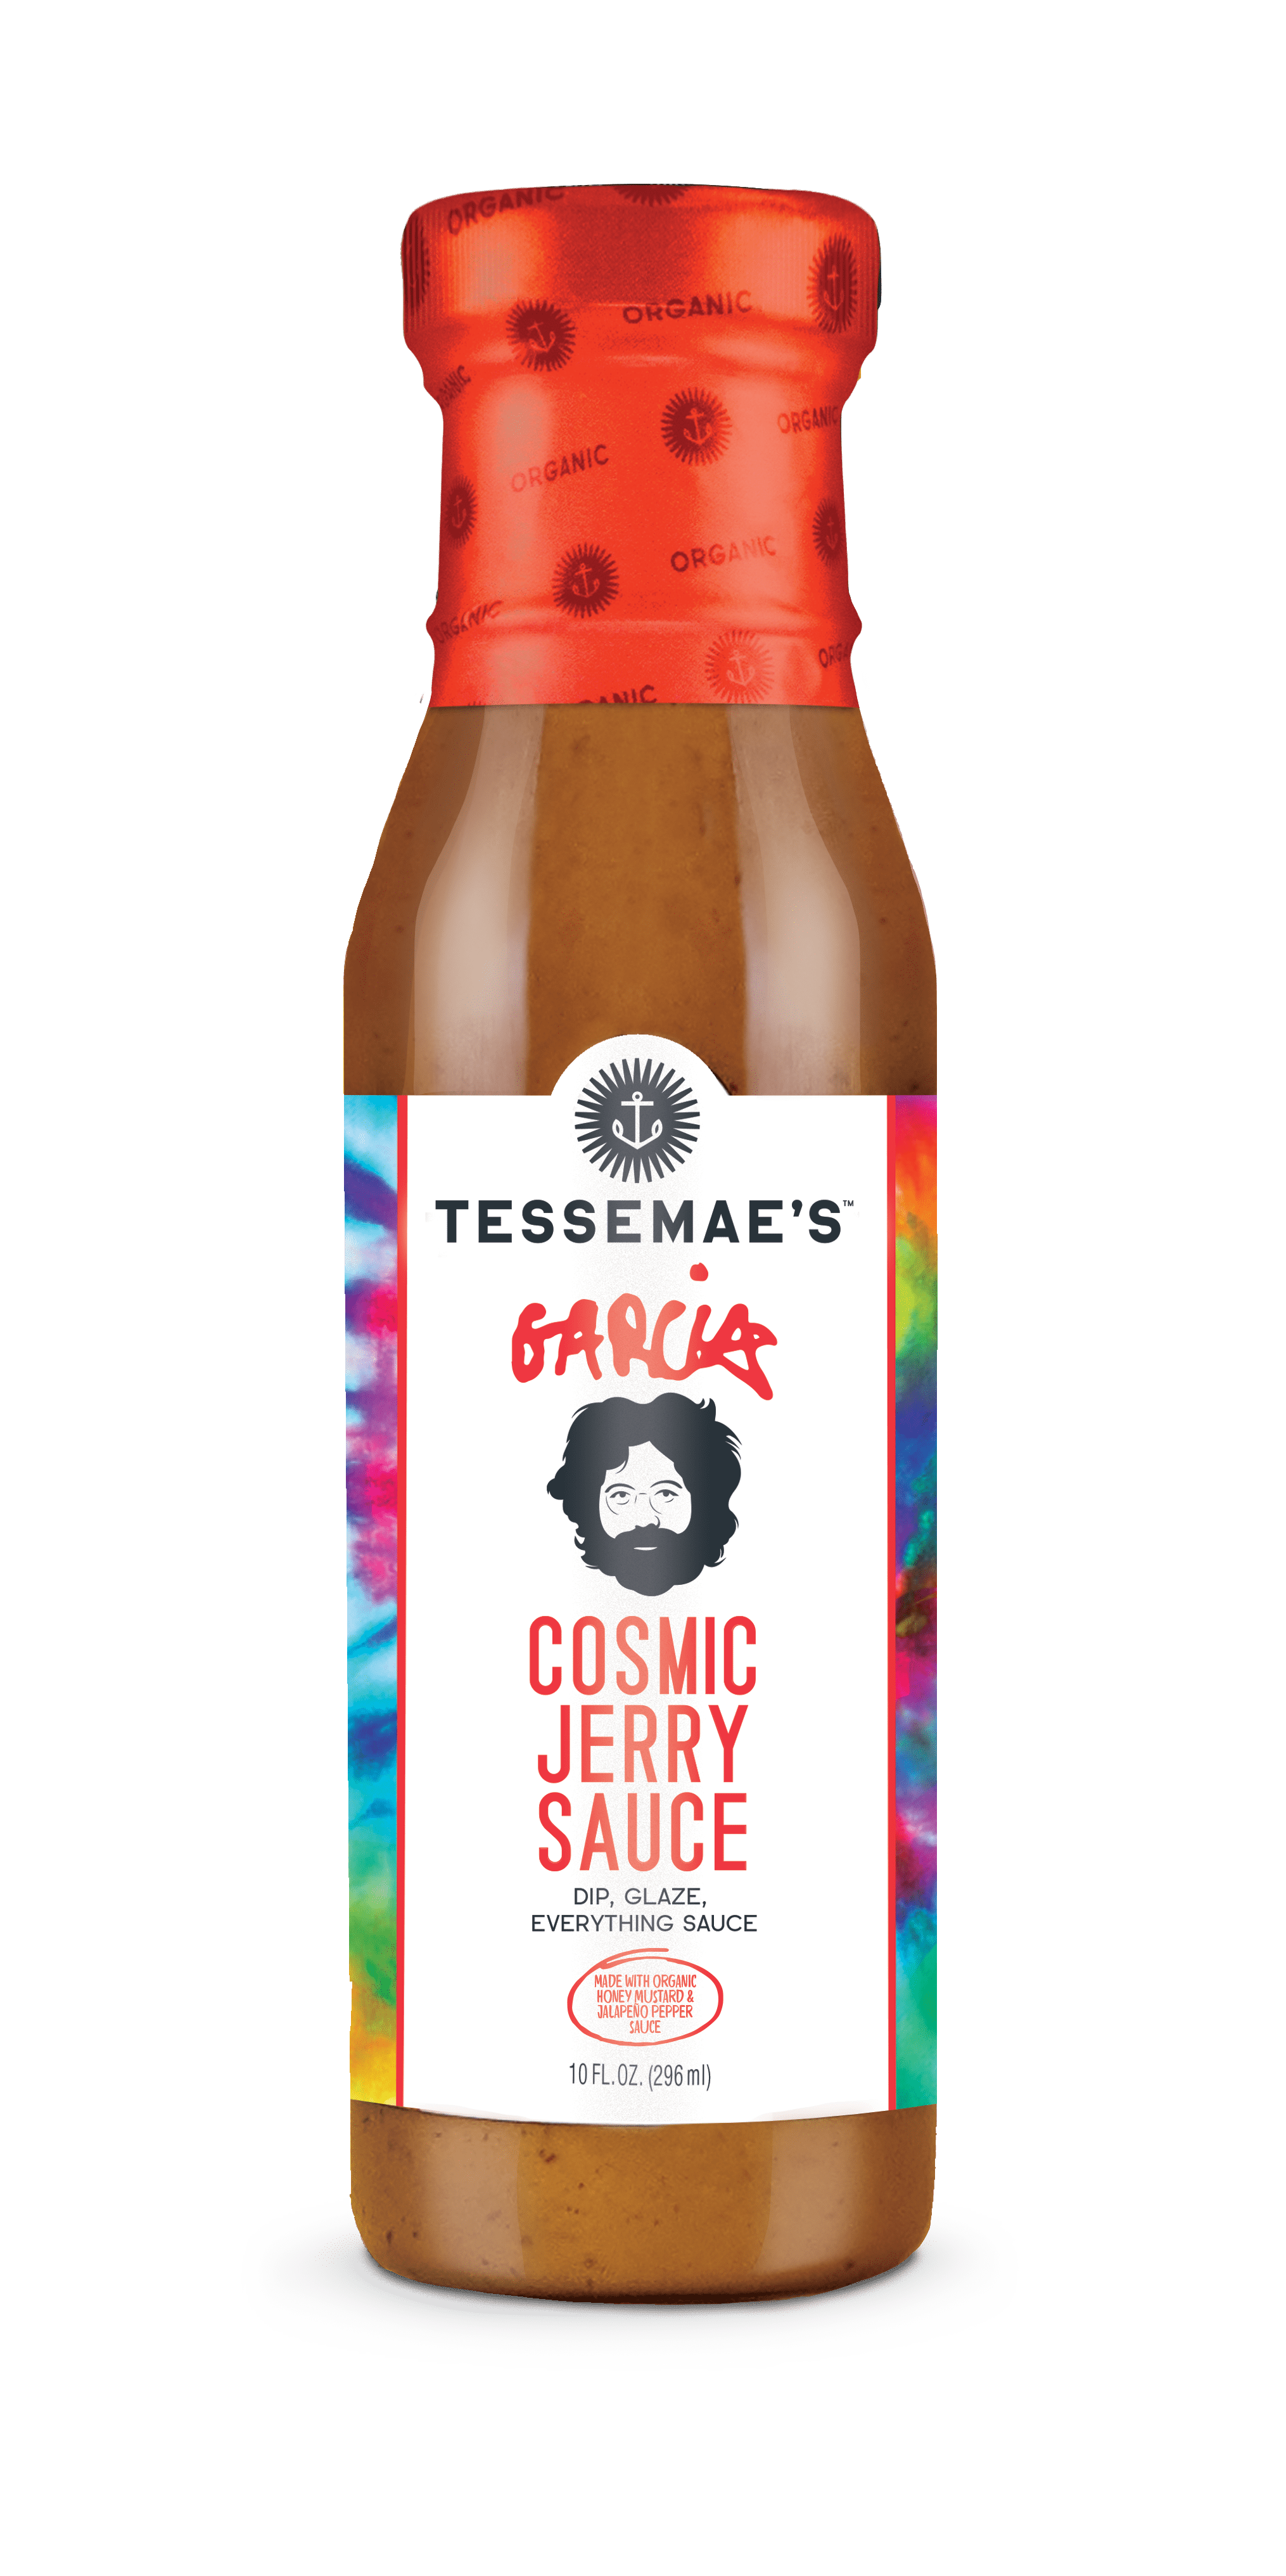 Tessemae's Cosmic Jerry Sauce 6 units per case 10.0 oz